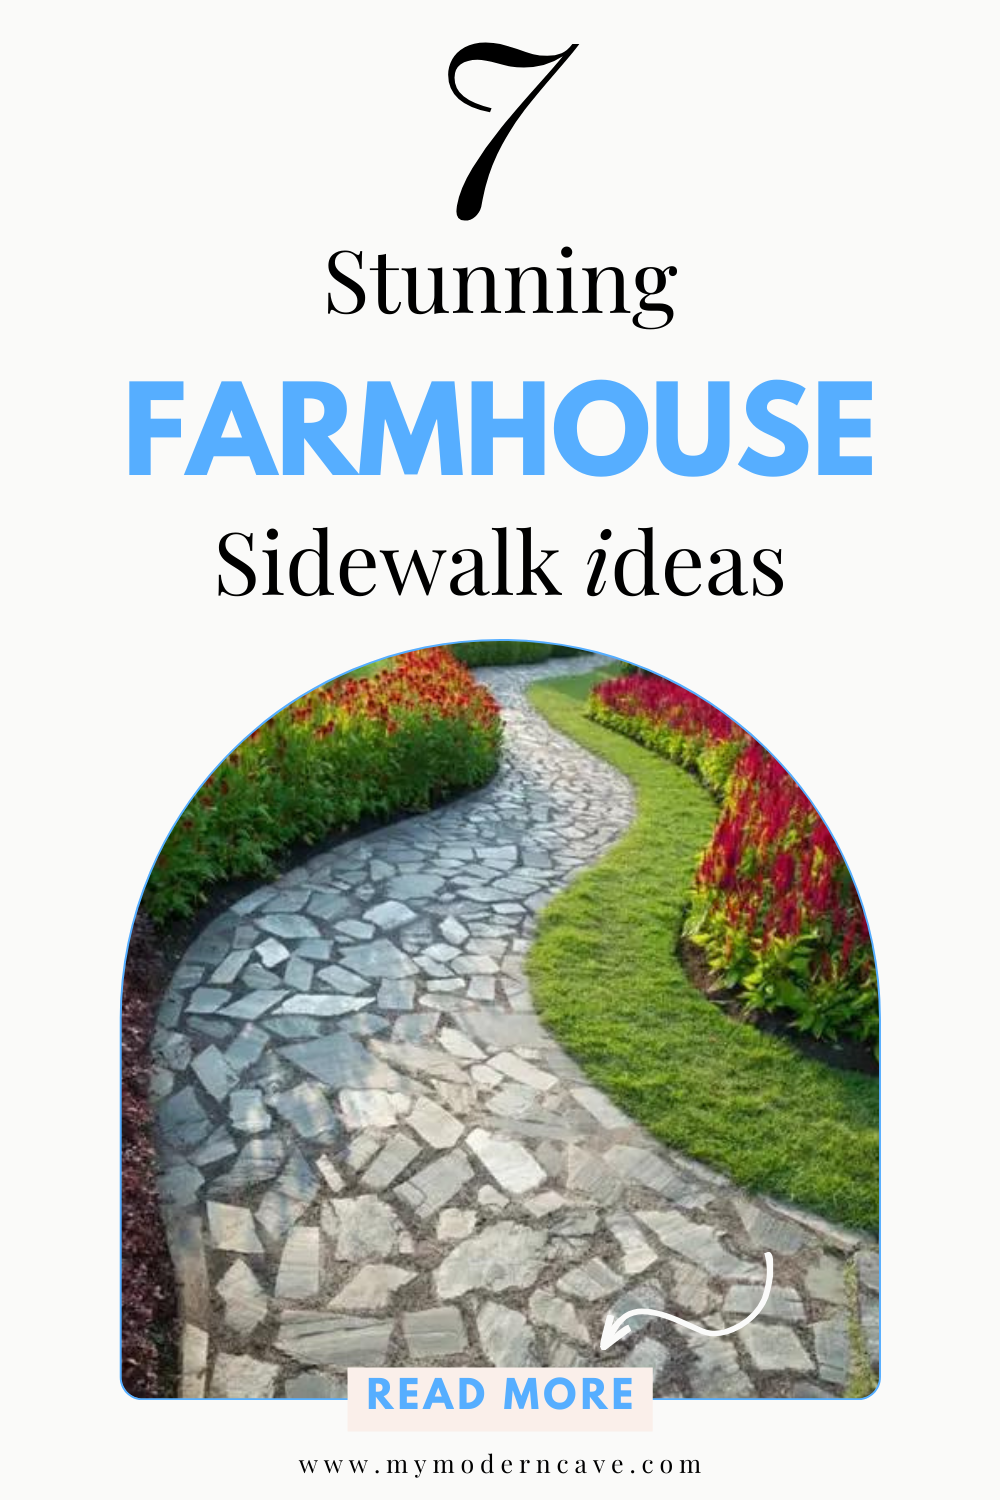 infographic on farmhouse sidewalk ideas